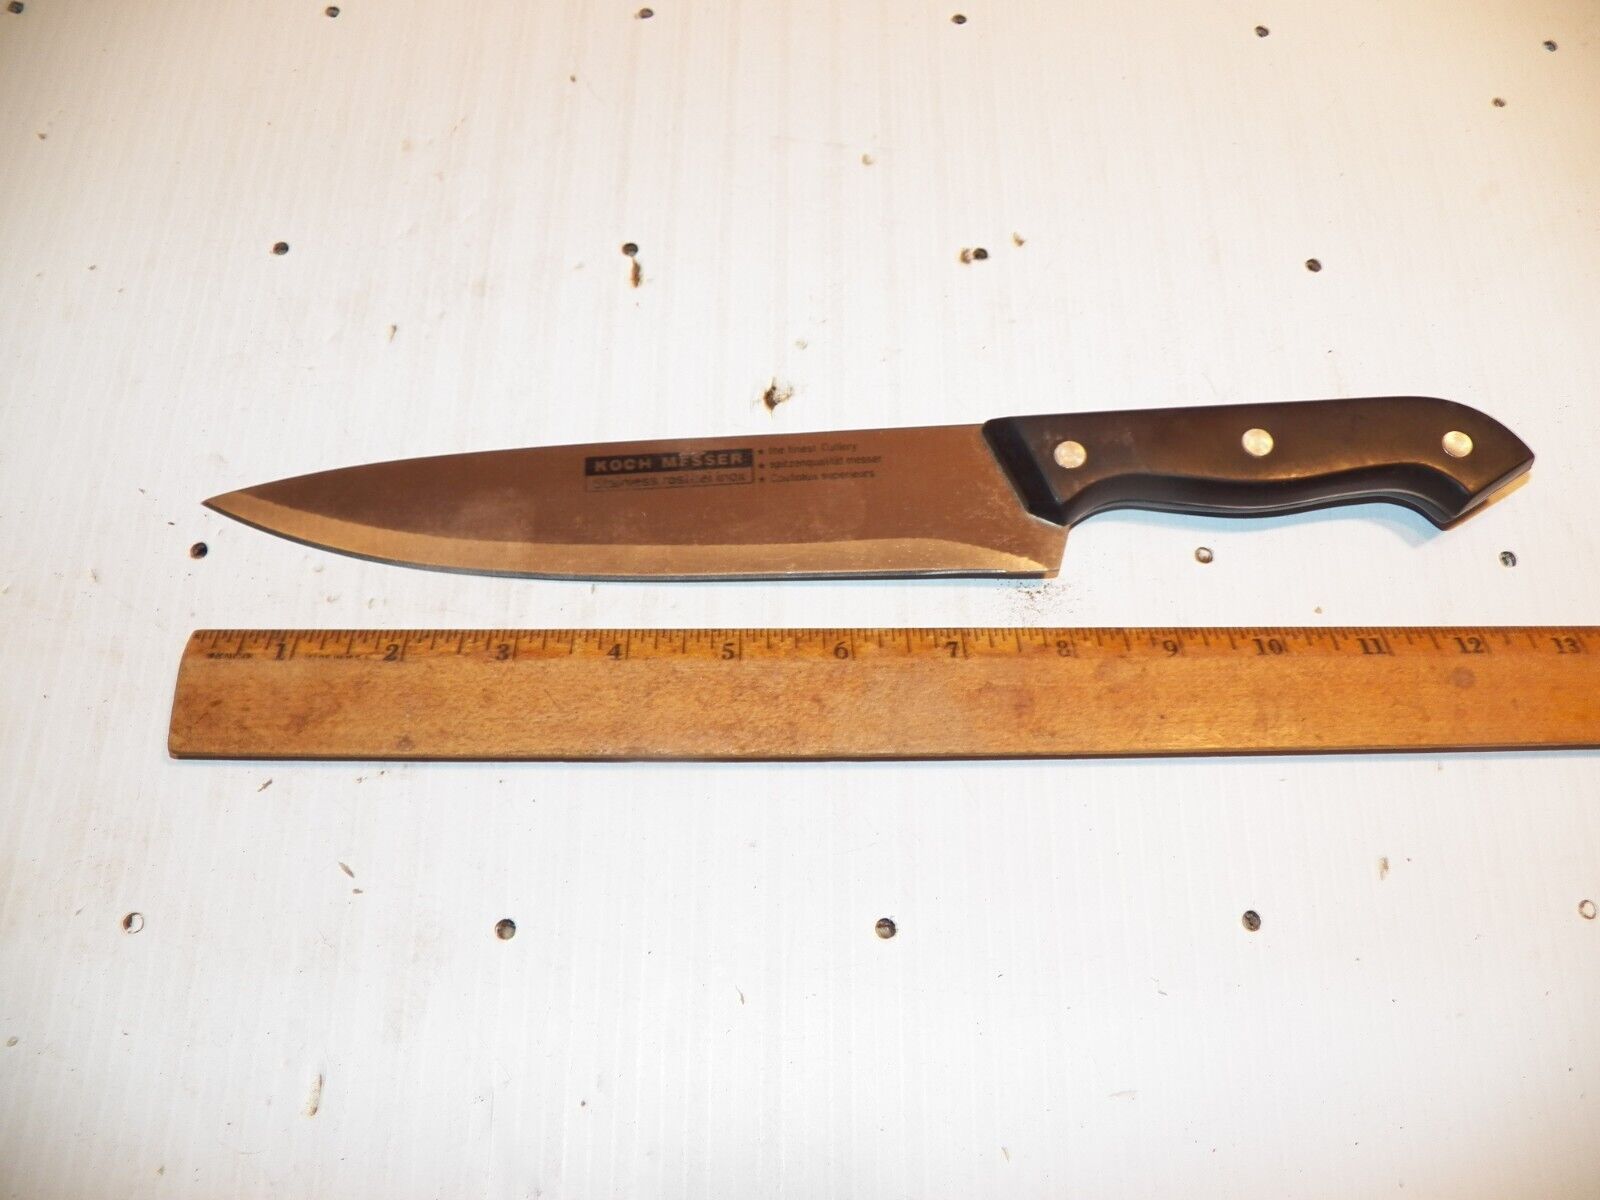 Vintage KOCH MESSER Stainless Steel Carving Knife